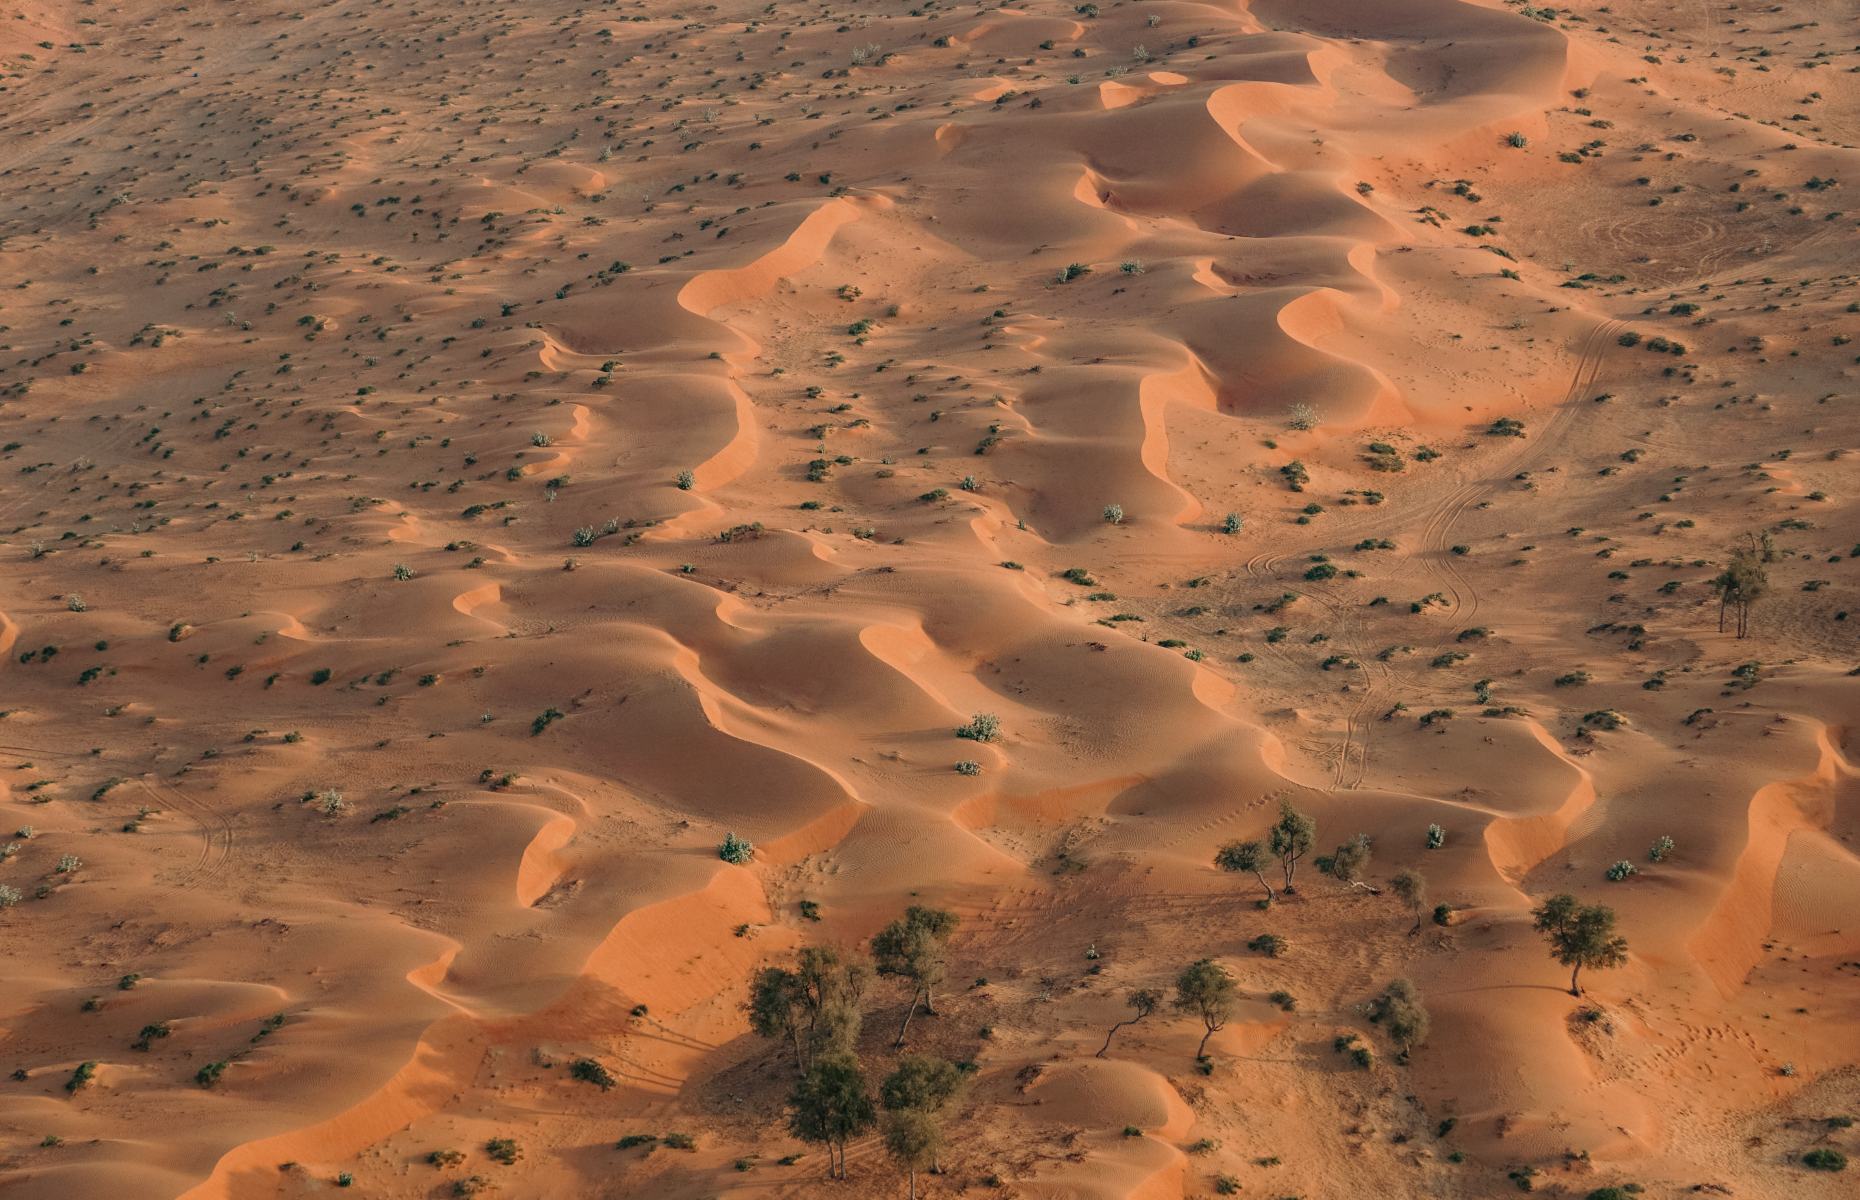 Ras Al Khaimah desert at sunrise from above, UAE (Image: Hannah Foster-Roe)